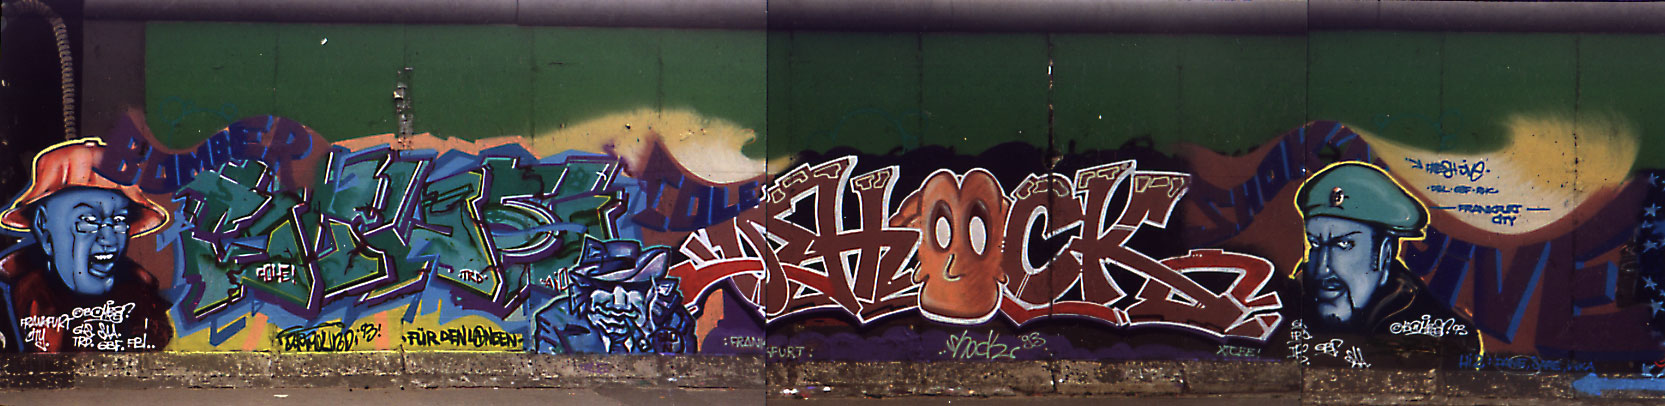 Graffiti Eastside Gallery 1993